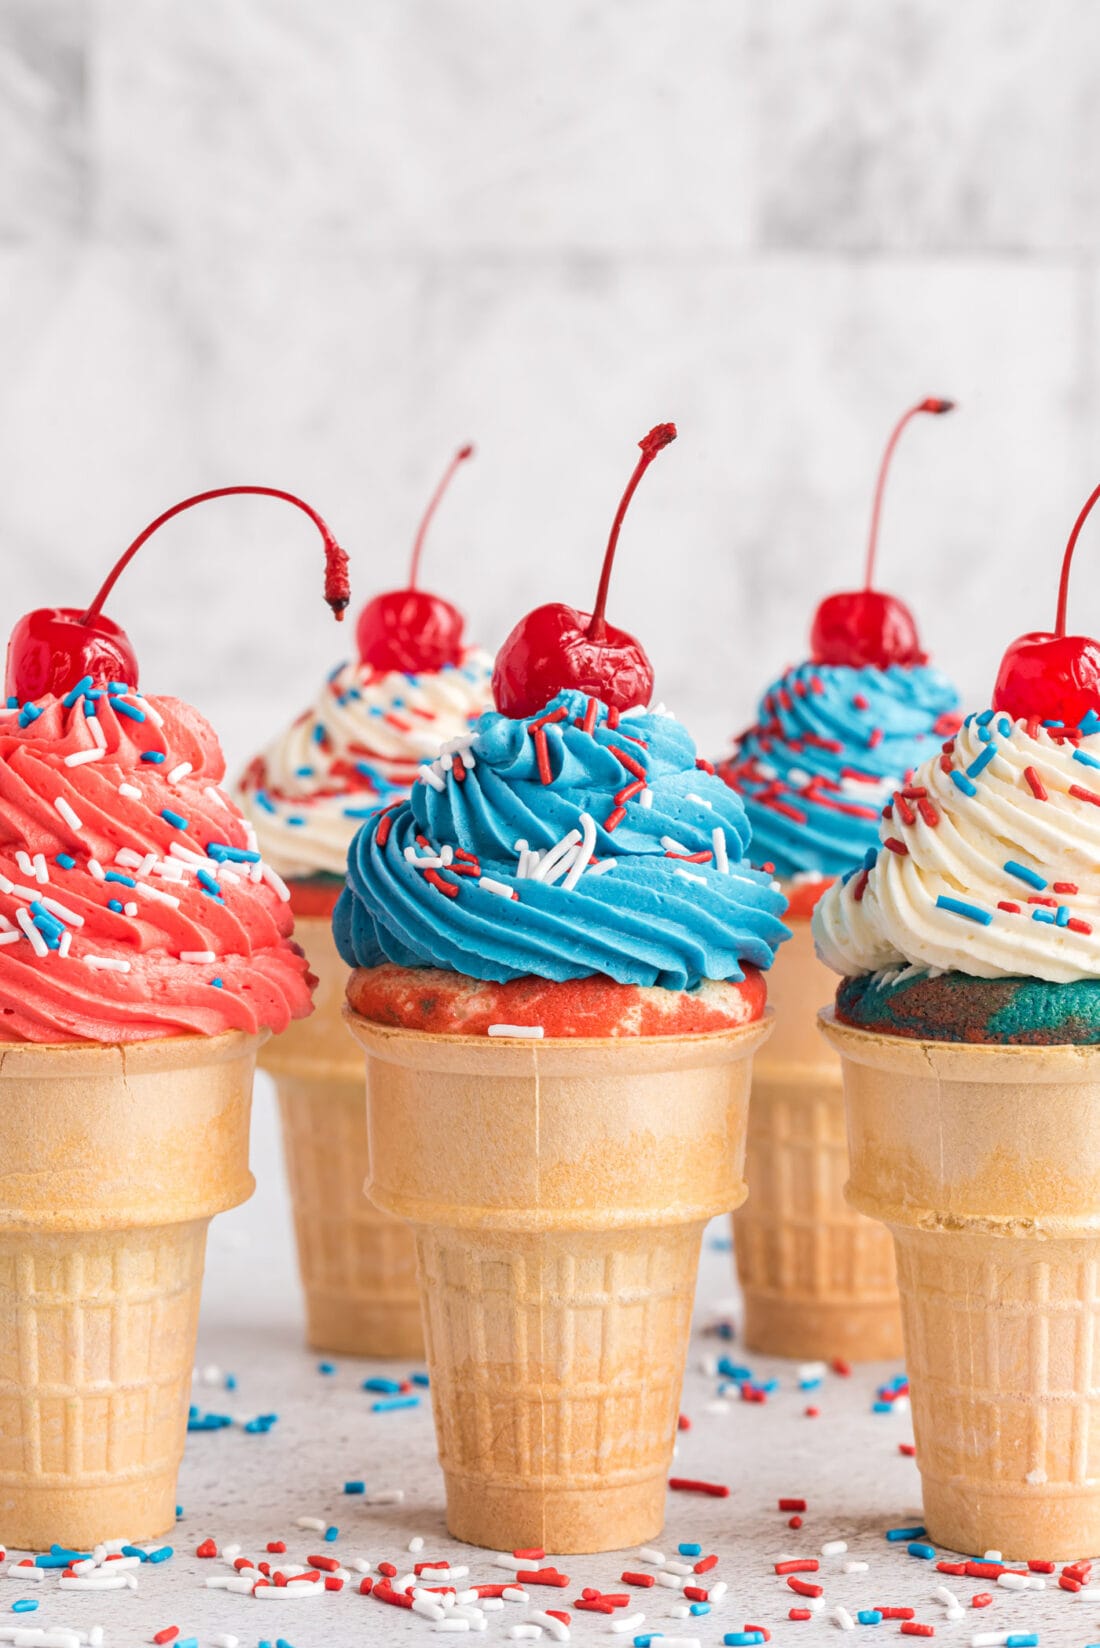 Patriotic Ice Cream Cone Cupcakes topped with cherries